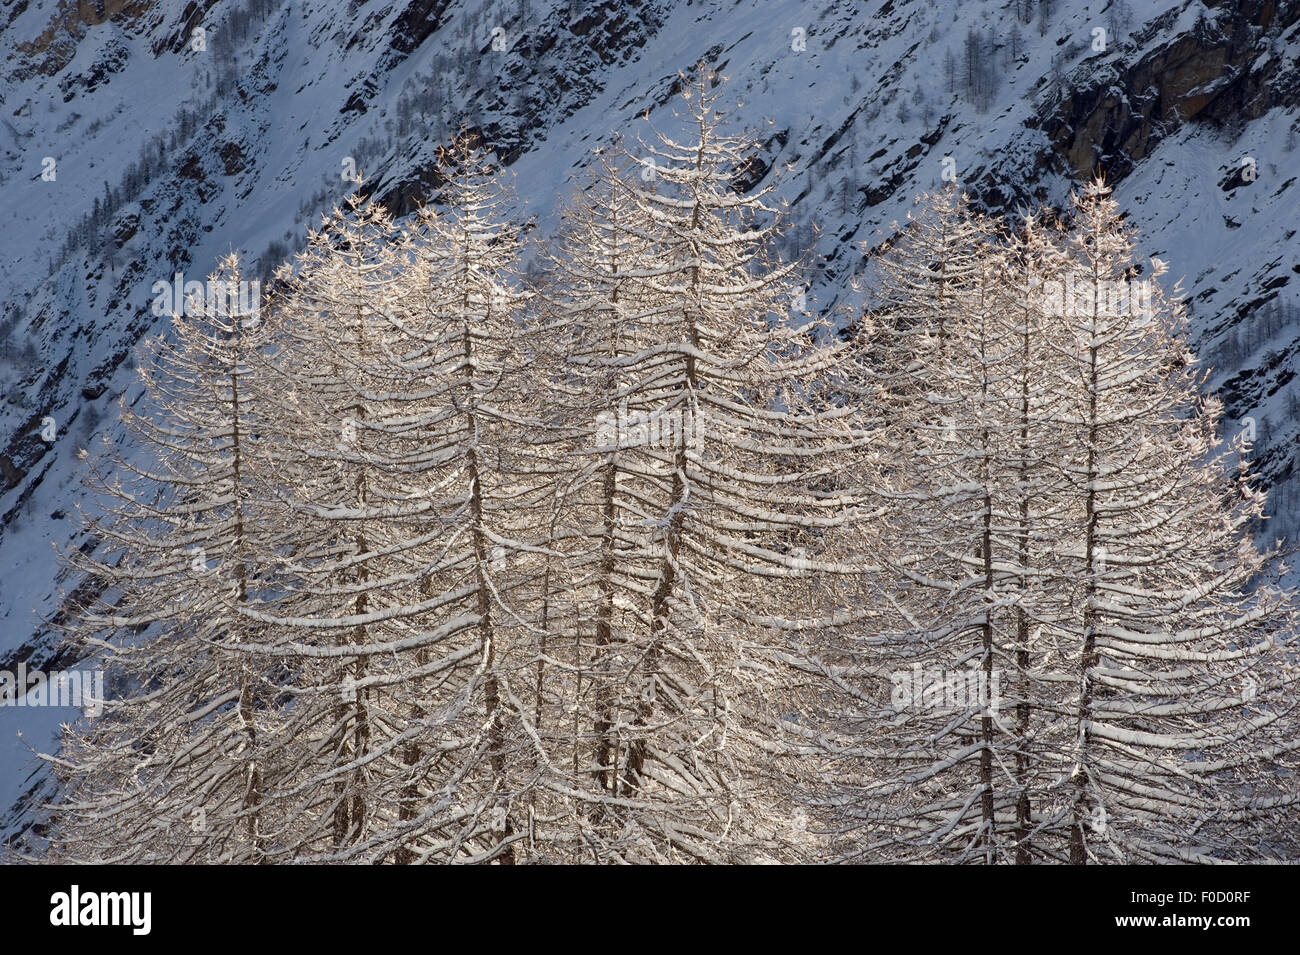 European Larch (Larix decidua) trees covered in snow, Gran Paradiso National Park, Italy, November 2008 Stock Photo